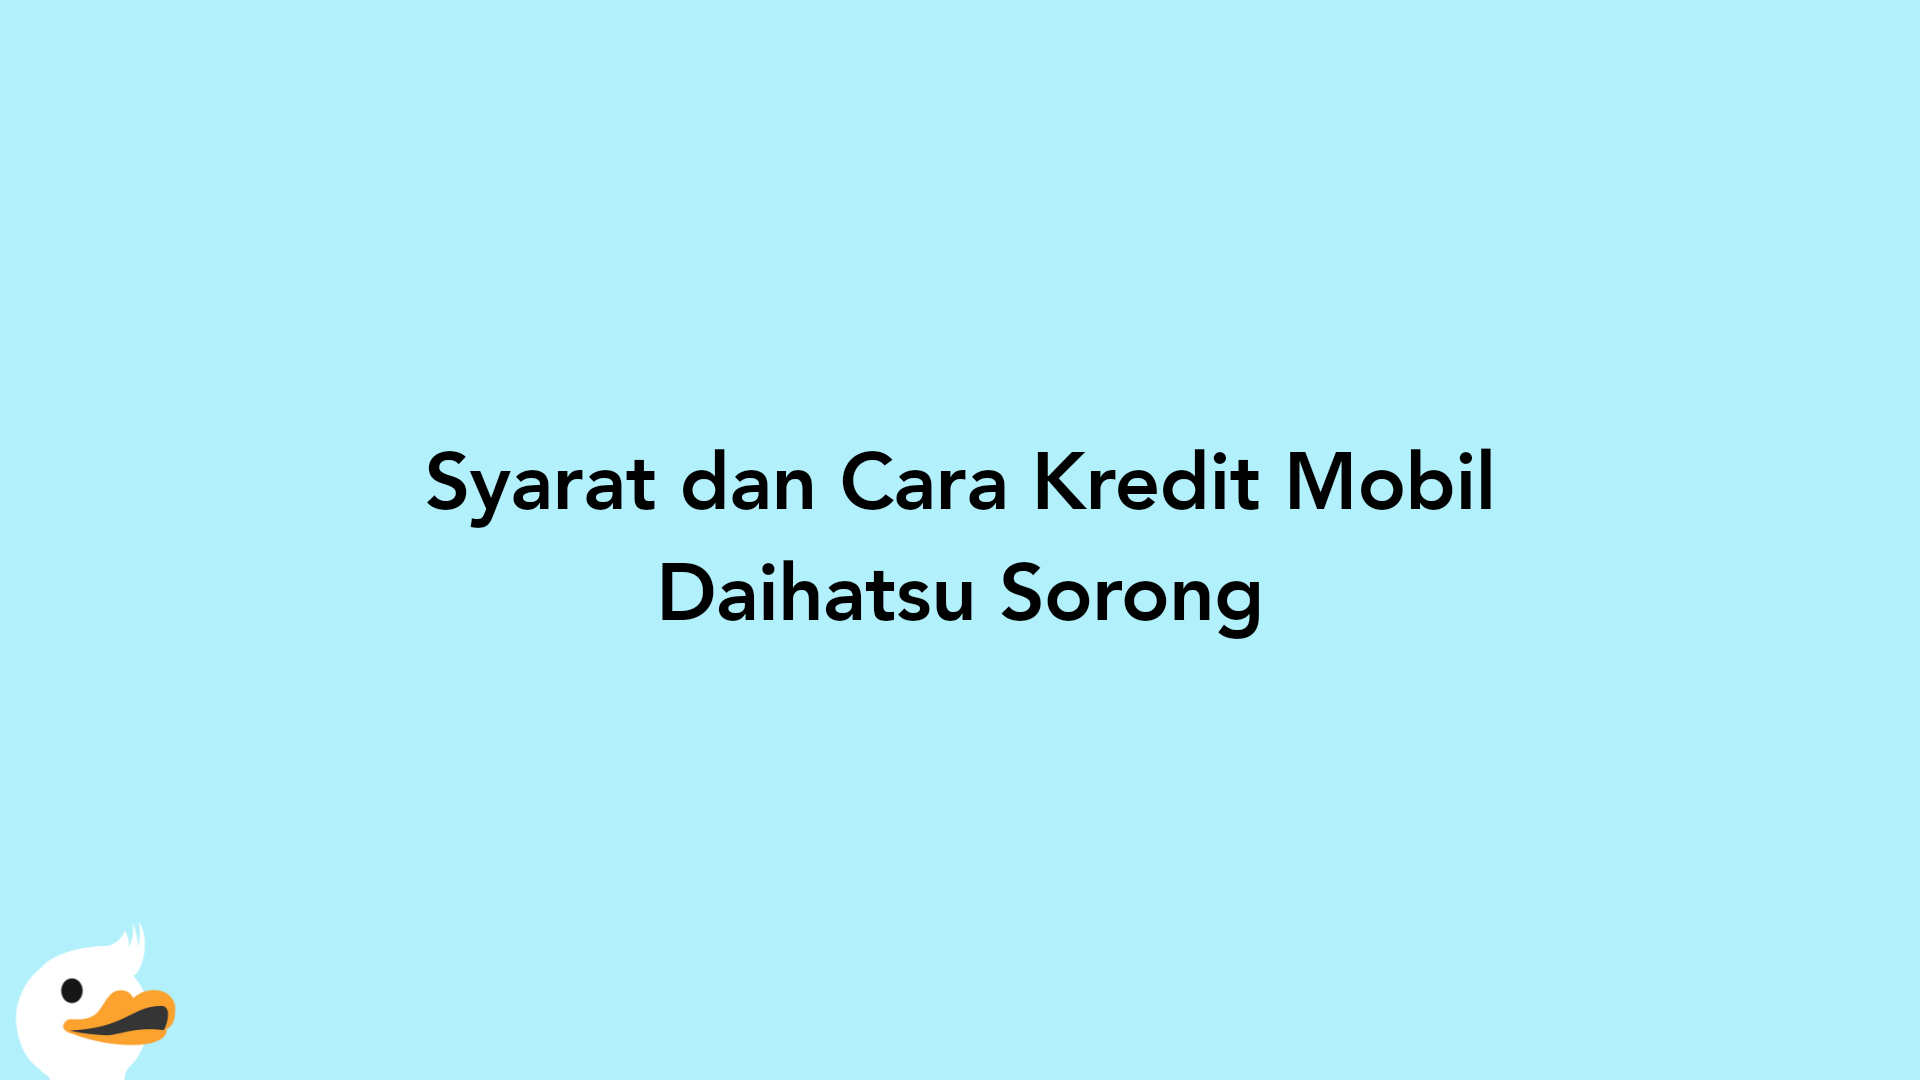 Syarat dan Cara Kredit Mobil Daihatsu Sorong